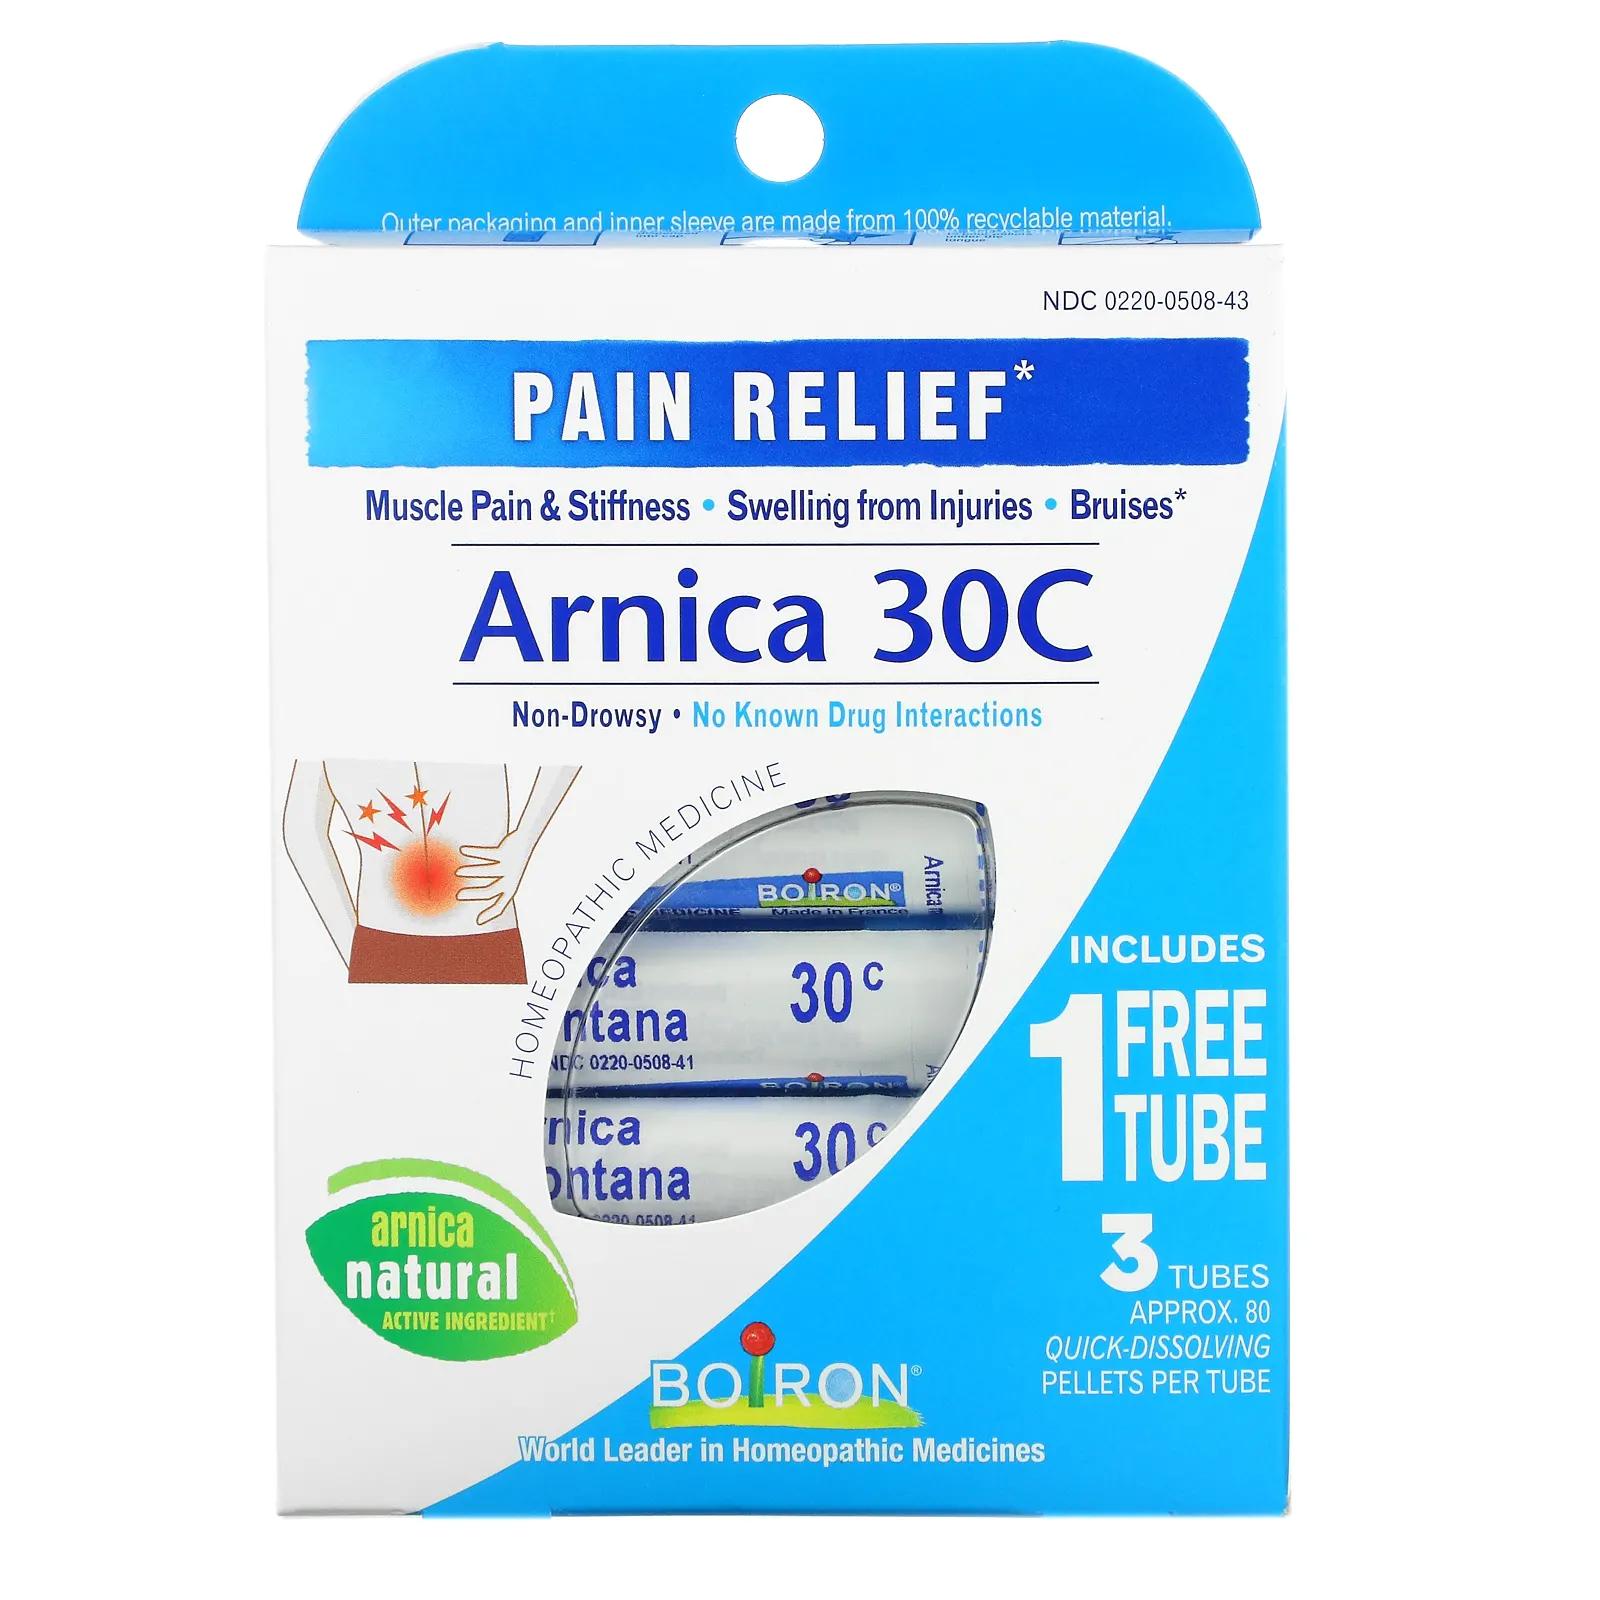 Boiron Single Remedies Arnica 30C обезболивающее 3 тюбика 80 пеллет в каждом